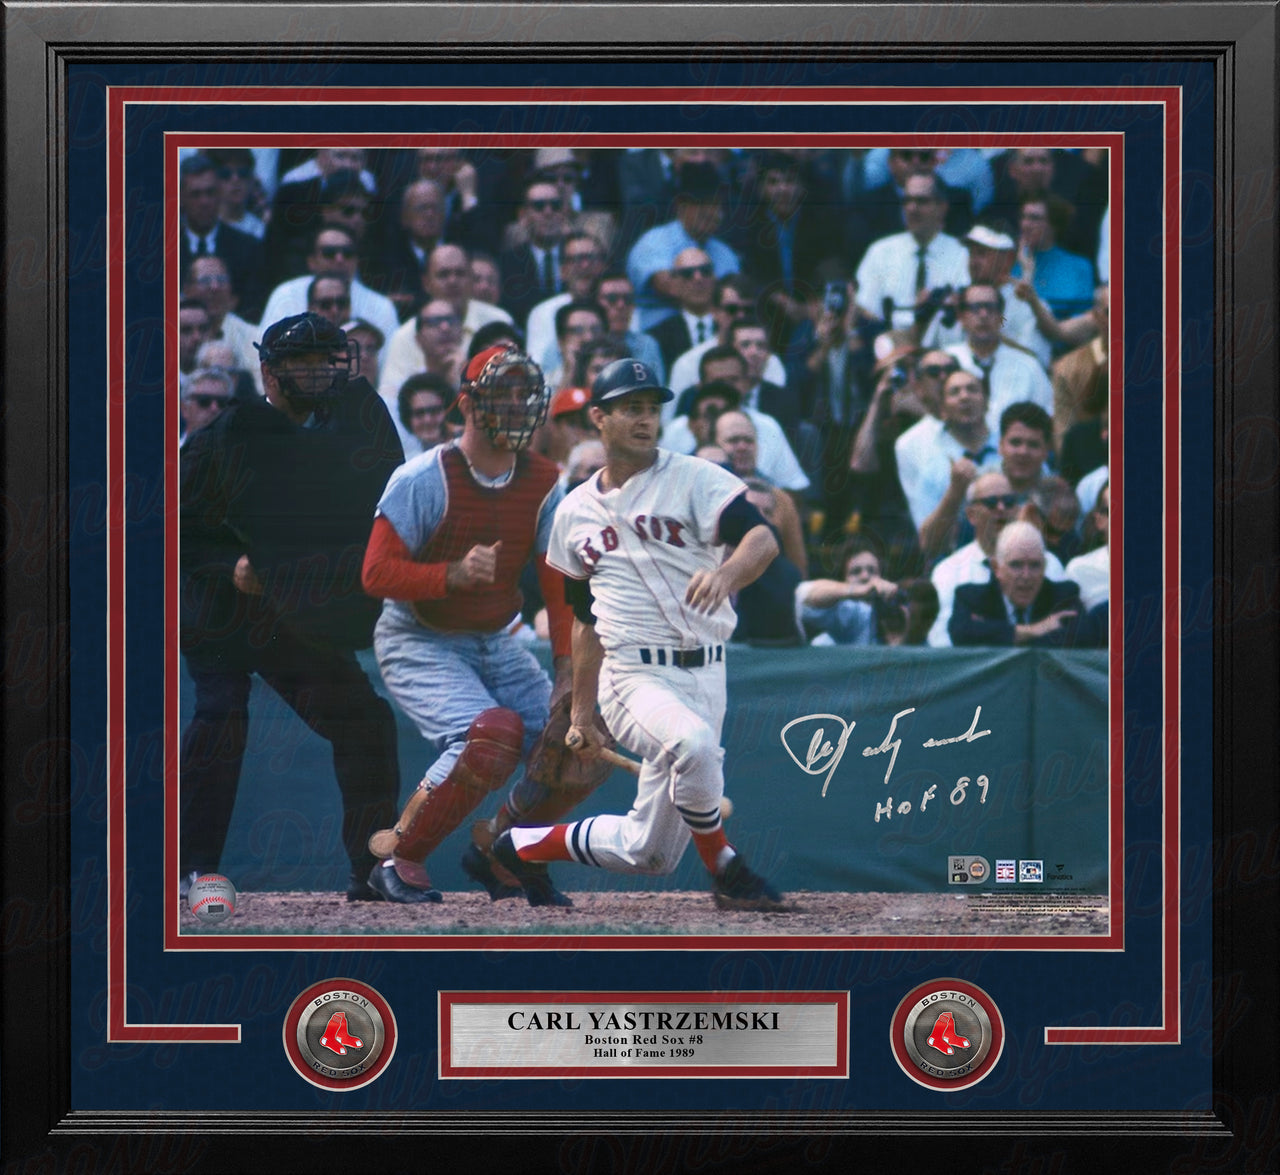 Carl Yastrzemski Boston Red Sox Autographed 16" x 20" Framed Baseball Photo Inscribed Hall of Fame